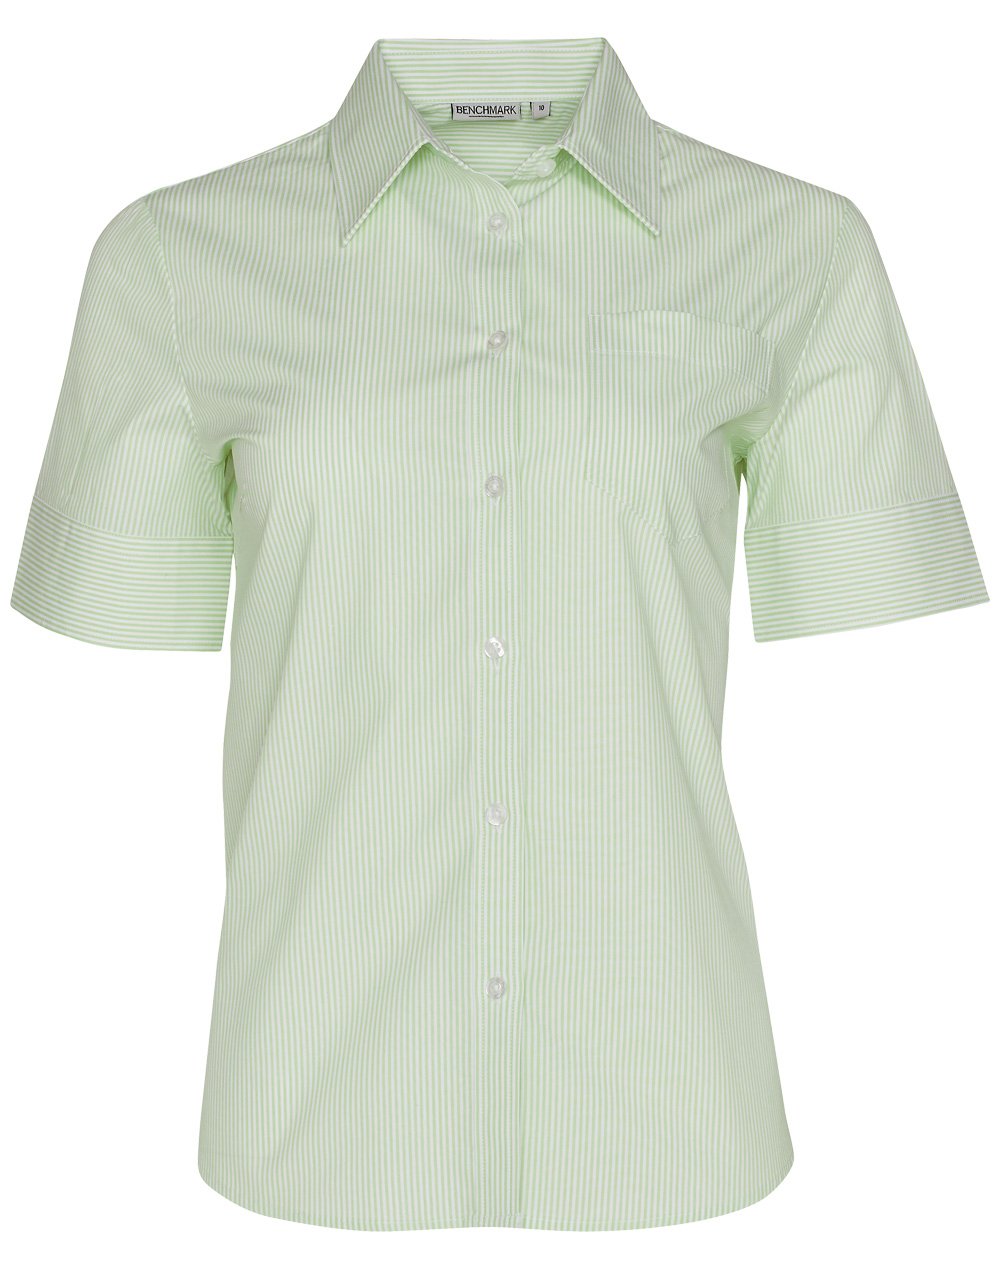 Benchmark M8234 Ladies Balance Stripe Short Sleeve Shirt